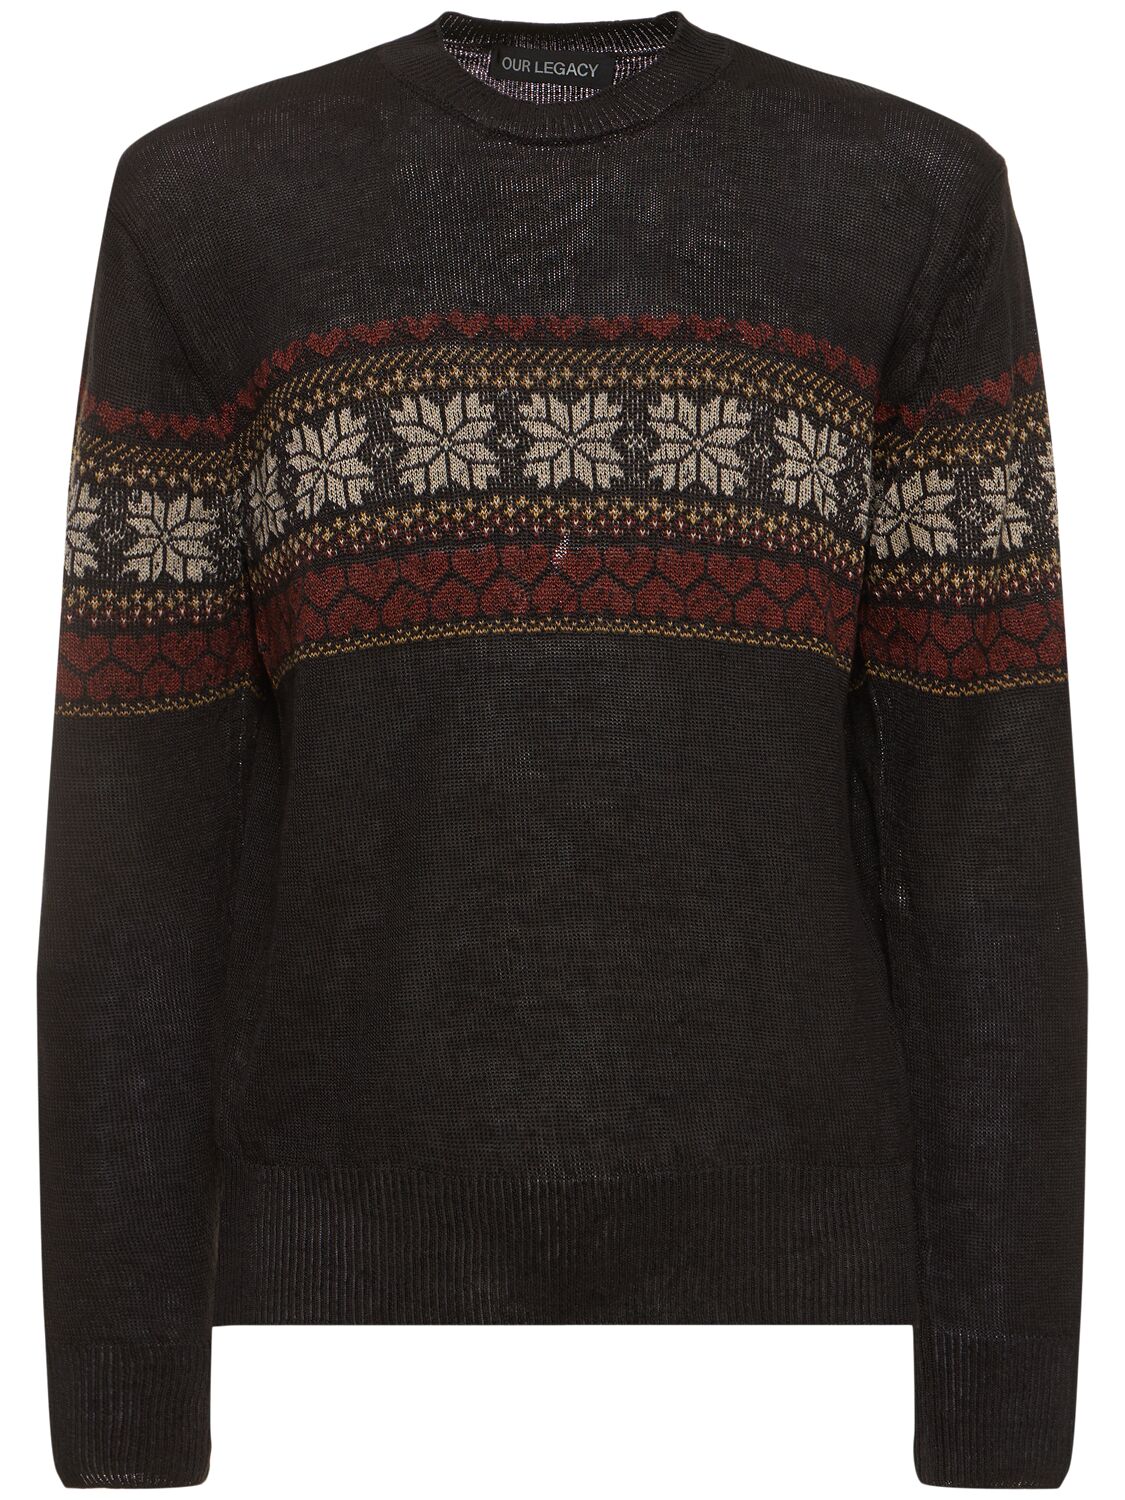 Image of Hemp Knit Crewneck Sweater